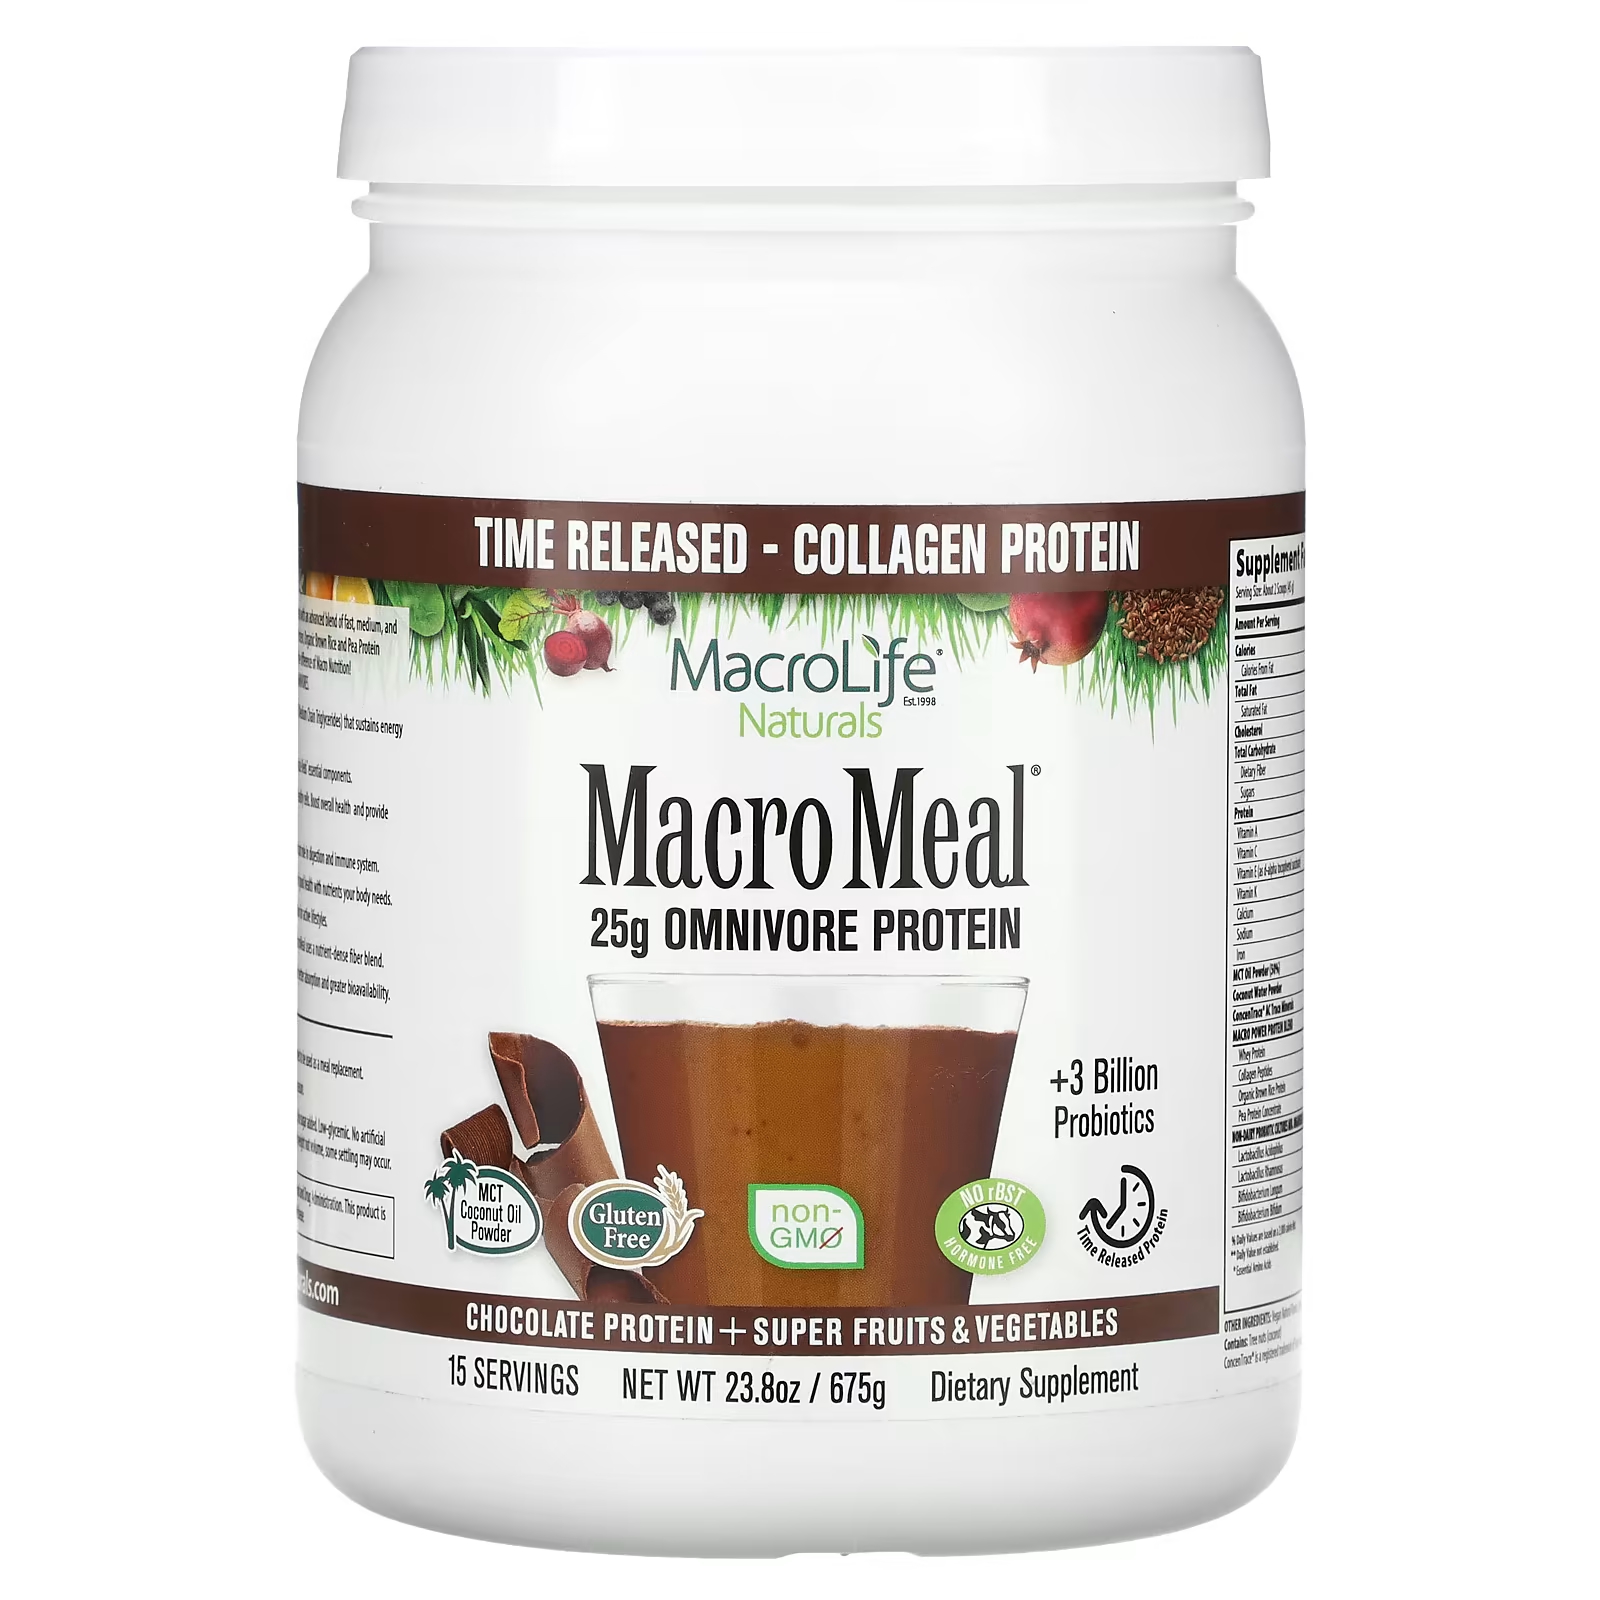 Macrolife Naturals MacroMeal Protein + суперфрукты и овощи, шоколад, 23,8 унции (675 г)